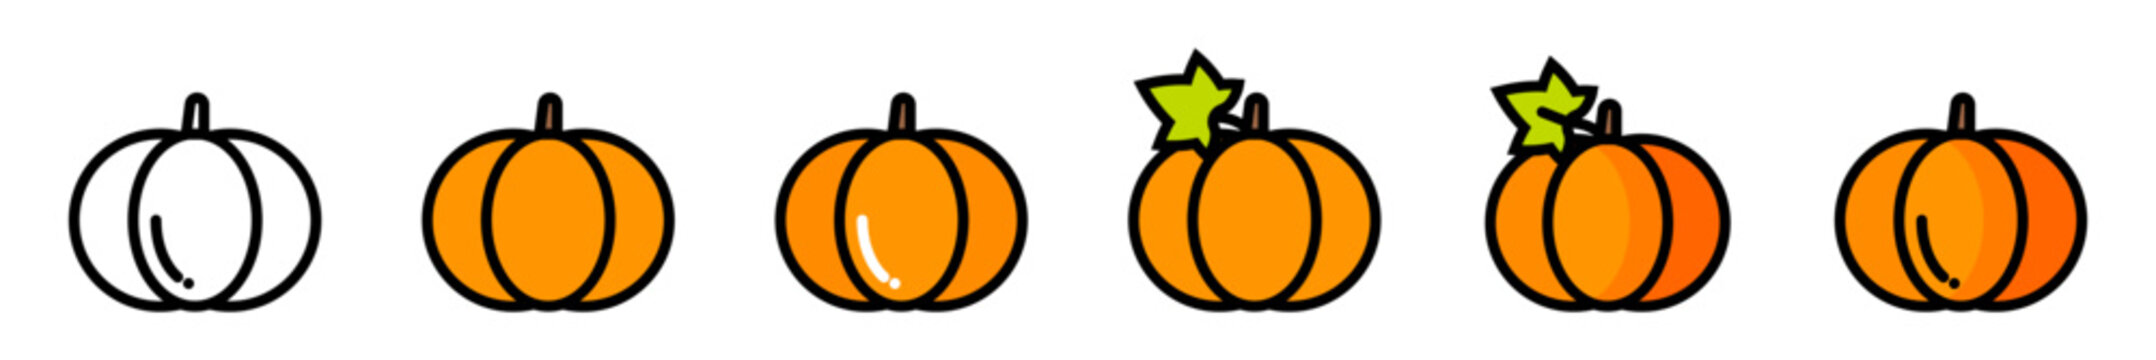 Orange pumpkin colorful icons. Vegetable sign line icons set. Juicy organic food logo symbol. Vector stock illustration.